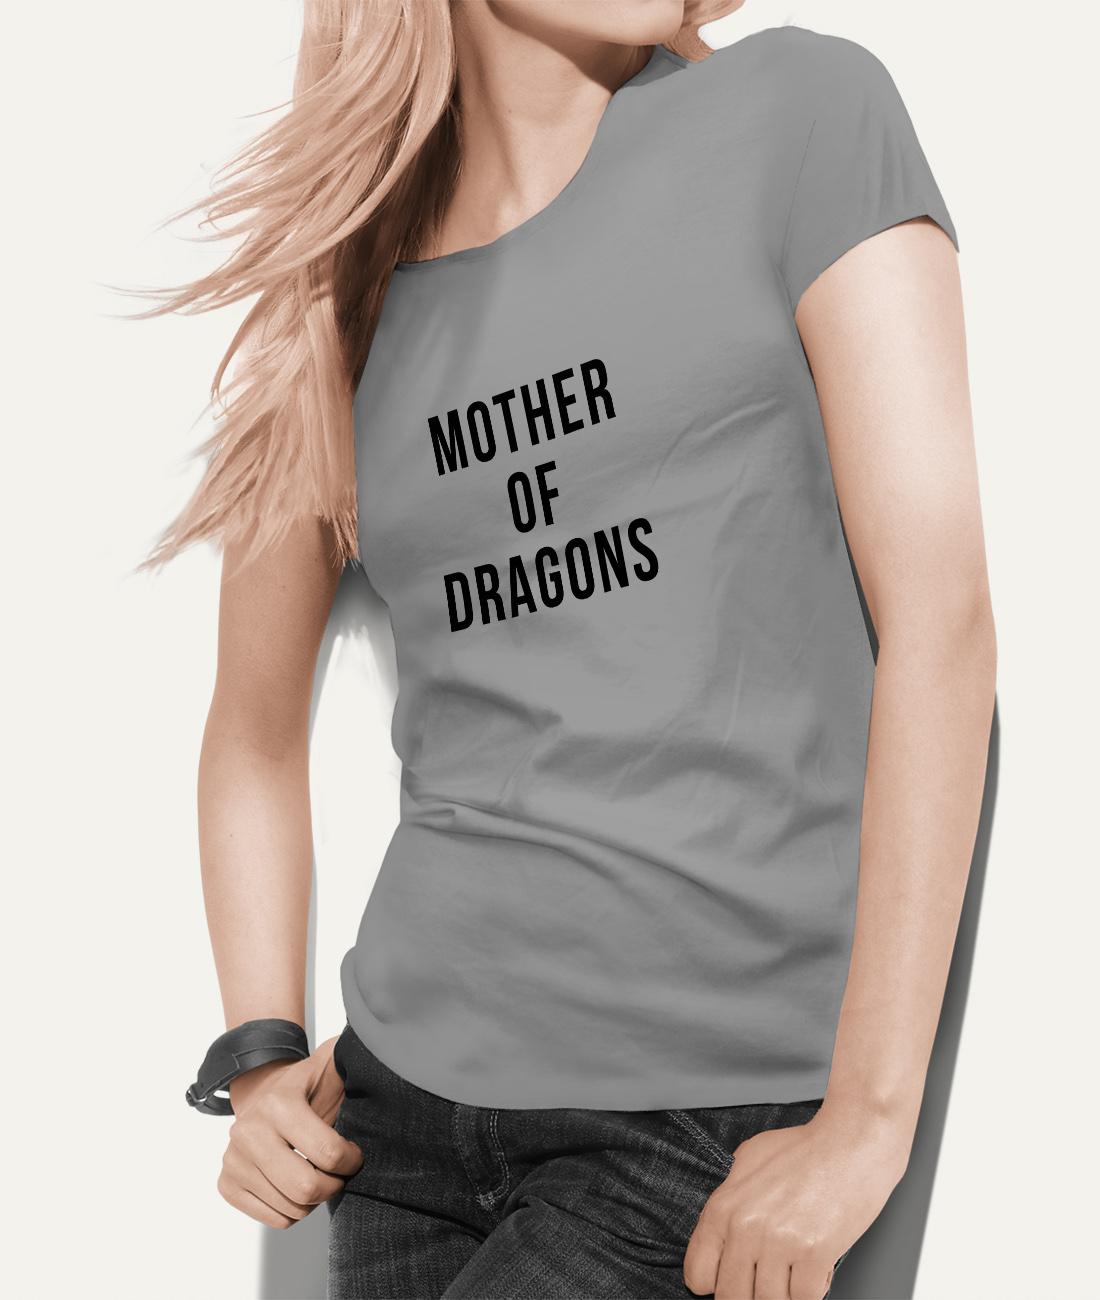 Tshirt Mother of dragons T-shirt